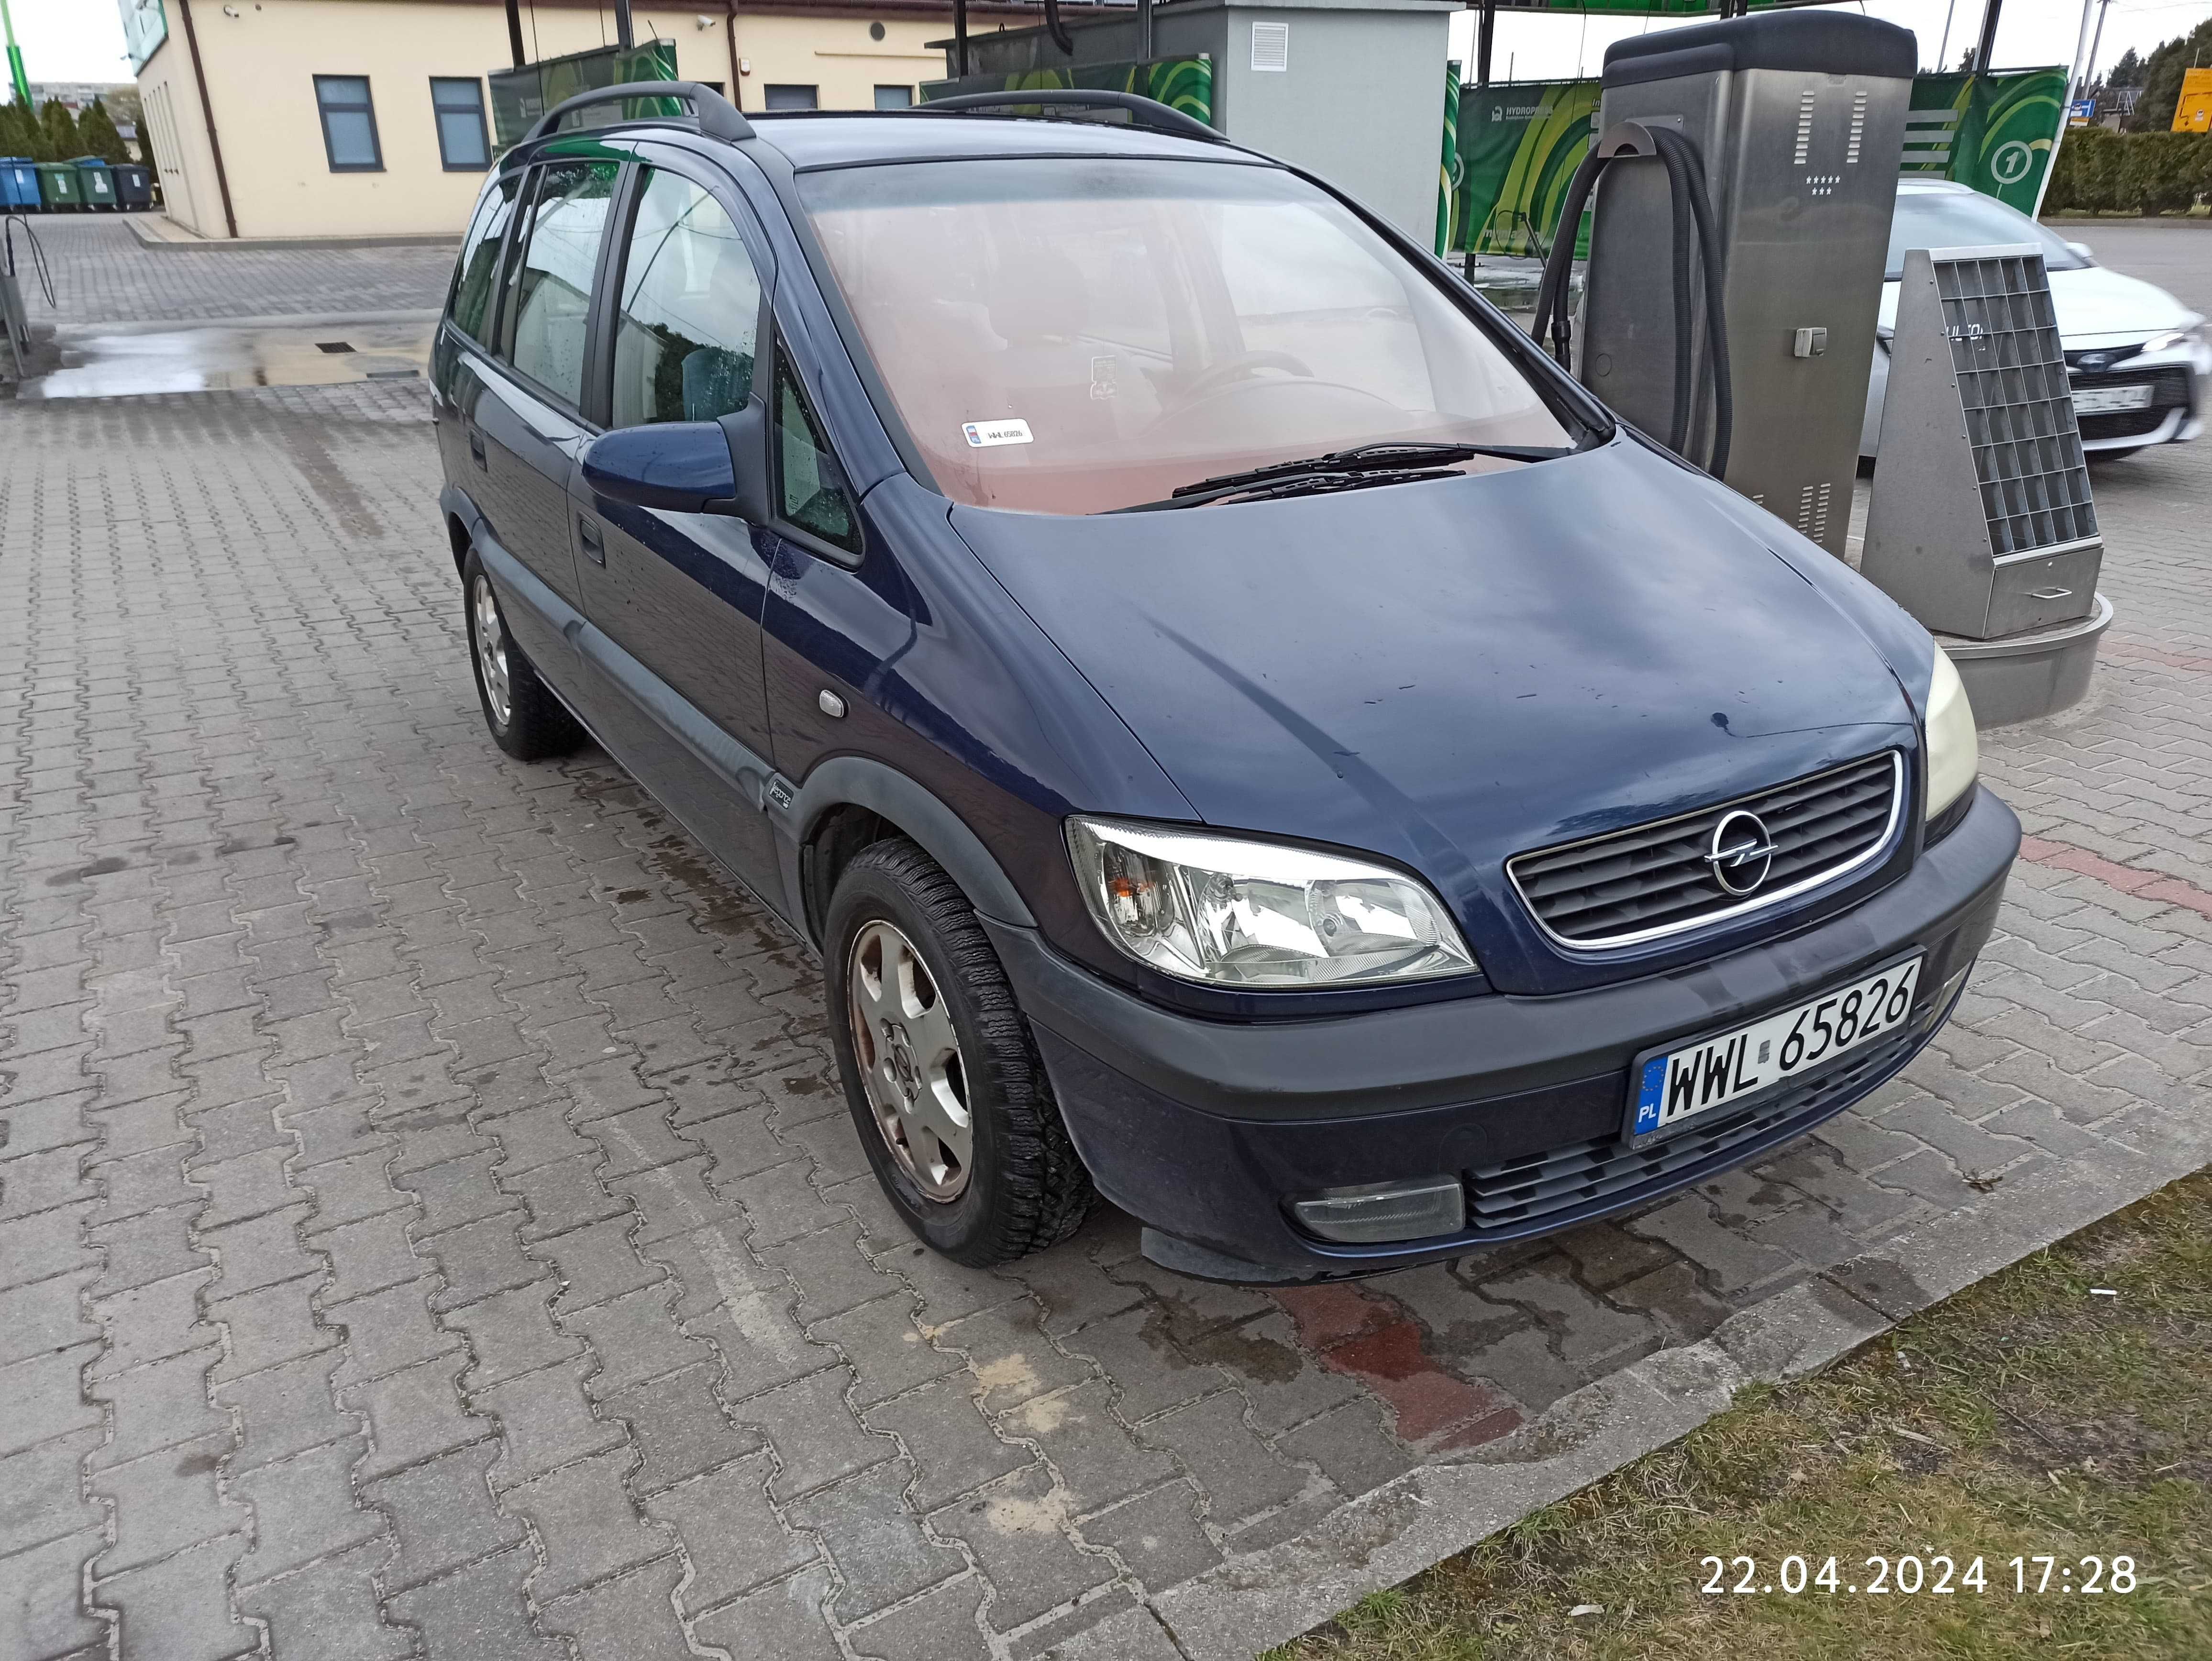 Opel Zafira A, 7 osobowy, benzyna, 1,8, 125KM